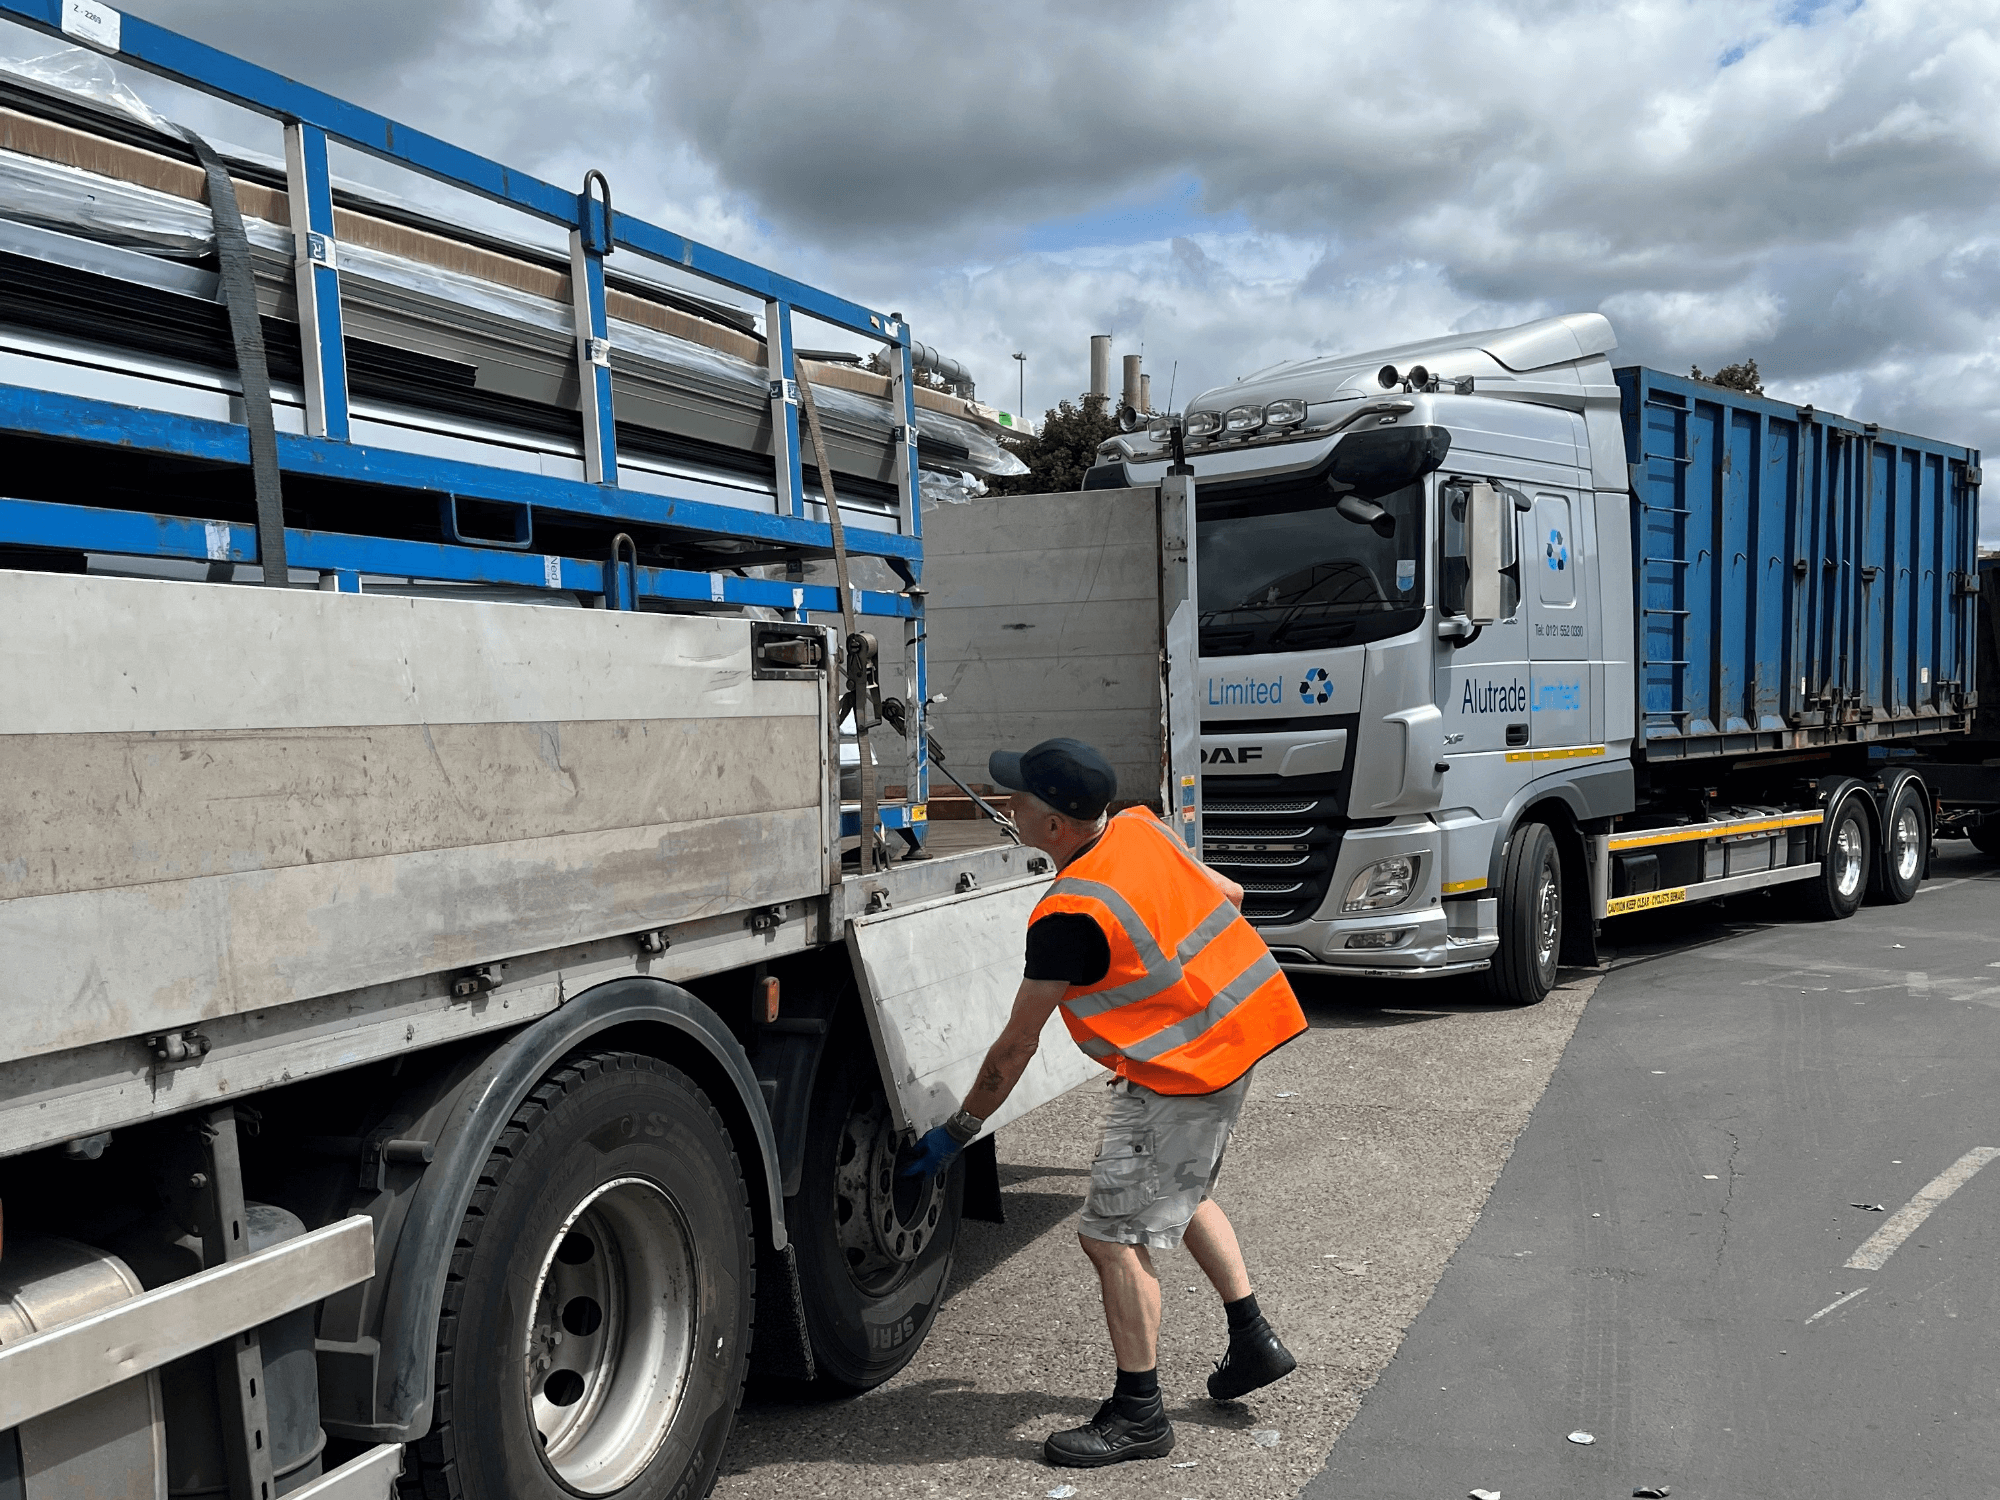 ALutrade employee unloading a truck